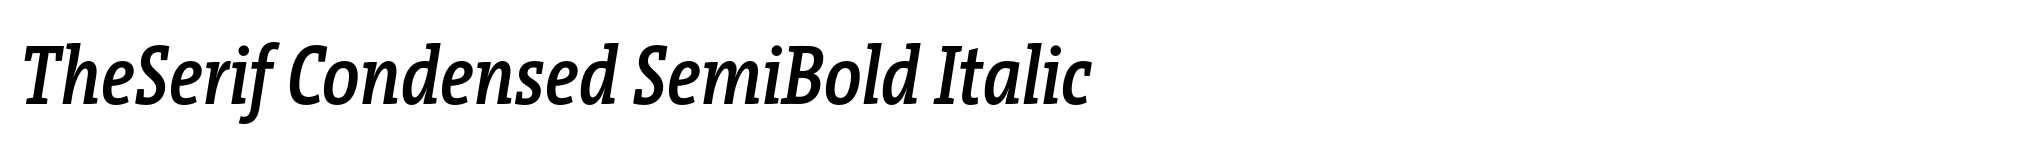 TheSerif Condensed SemiBold Italic image